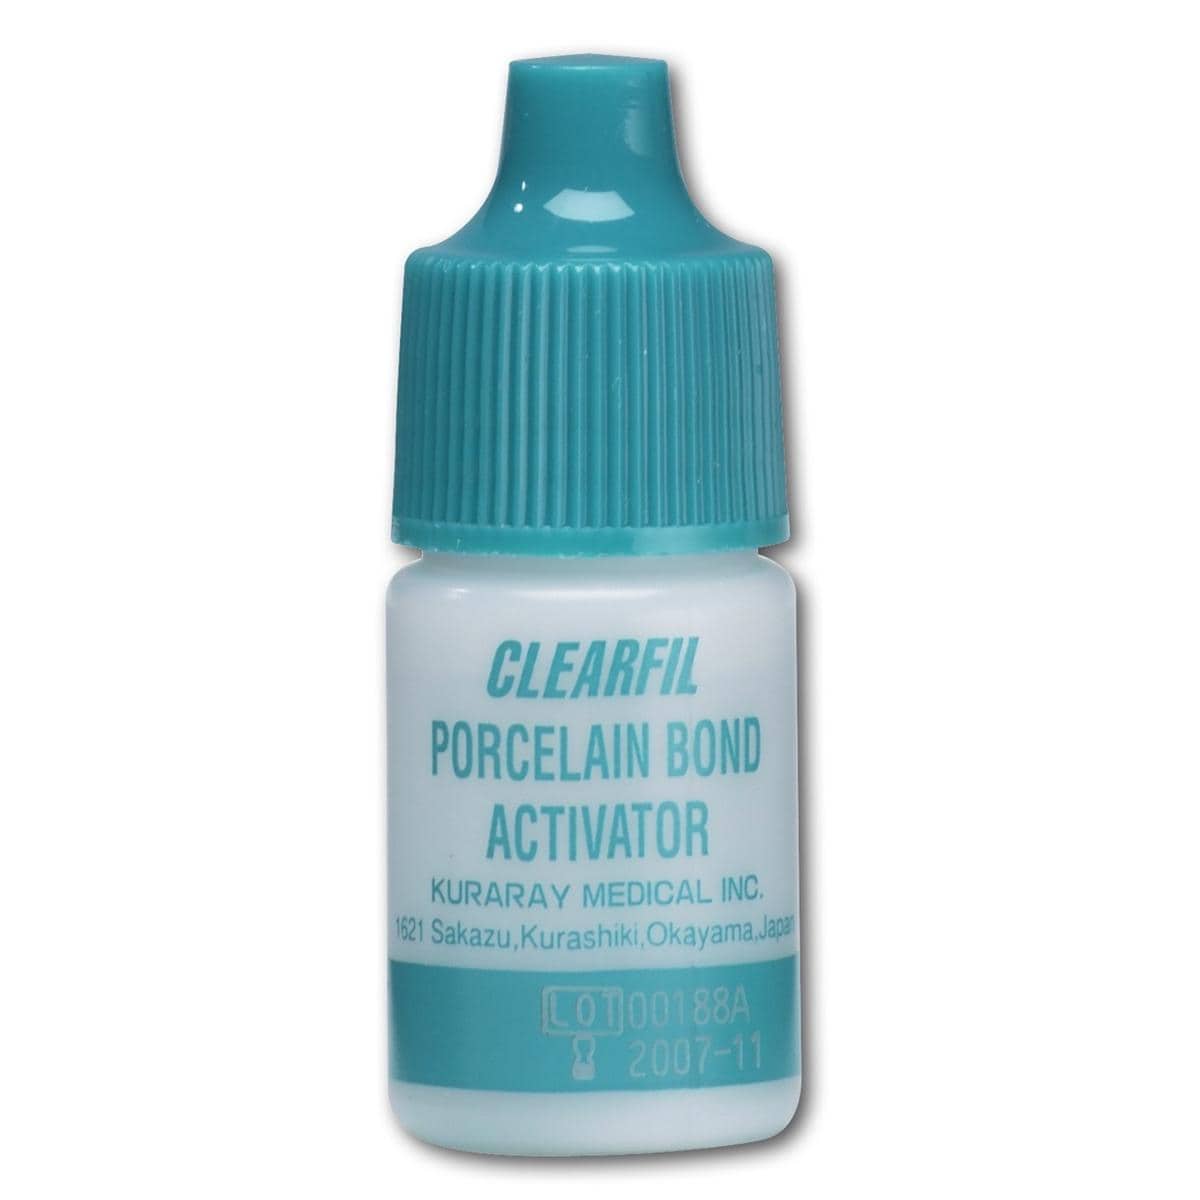 CLEARFIL™ PORCELAIN BOND ACTIVATOR - Flasche 4 ml